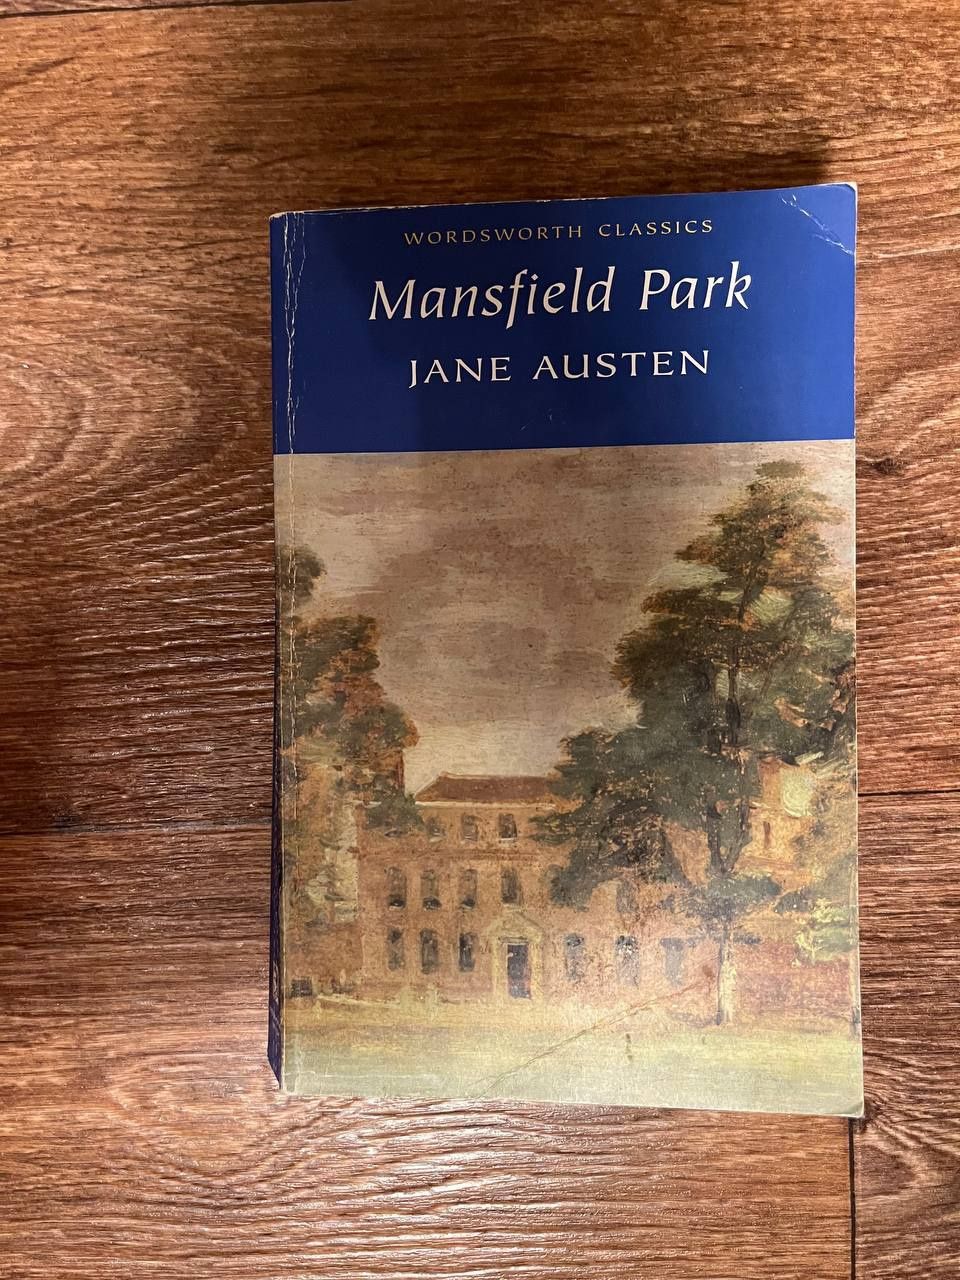 Книга Менсфілд Парк Mansfield Park

JANE AUSTEN
Mansfield Park

JANE A